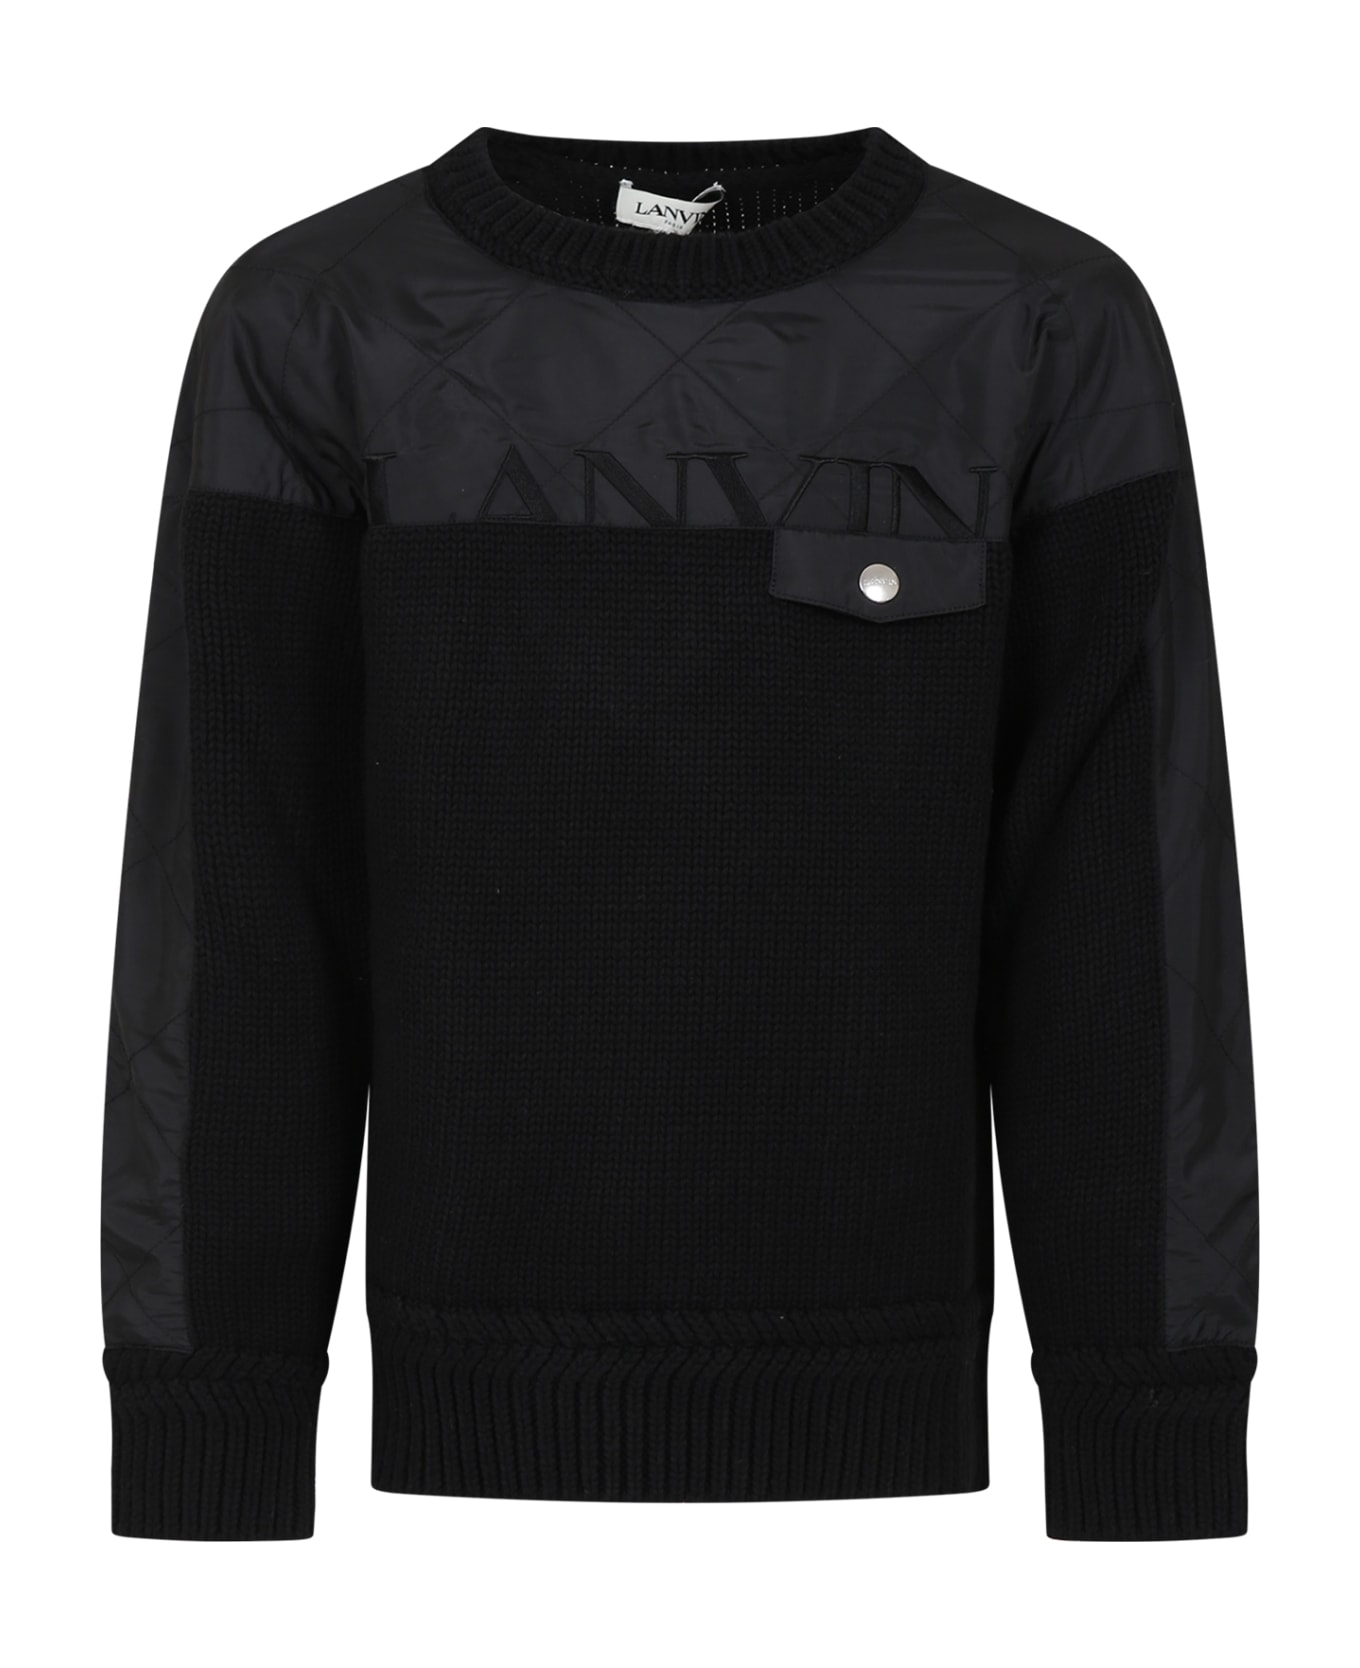 Lanvin Black Sweater With Logo For Boy - Black